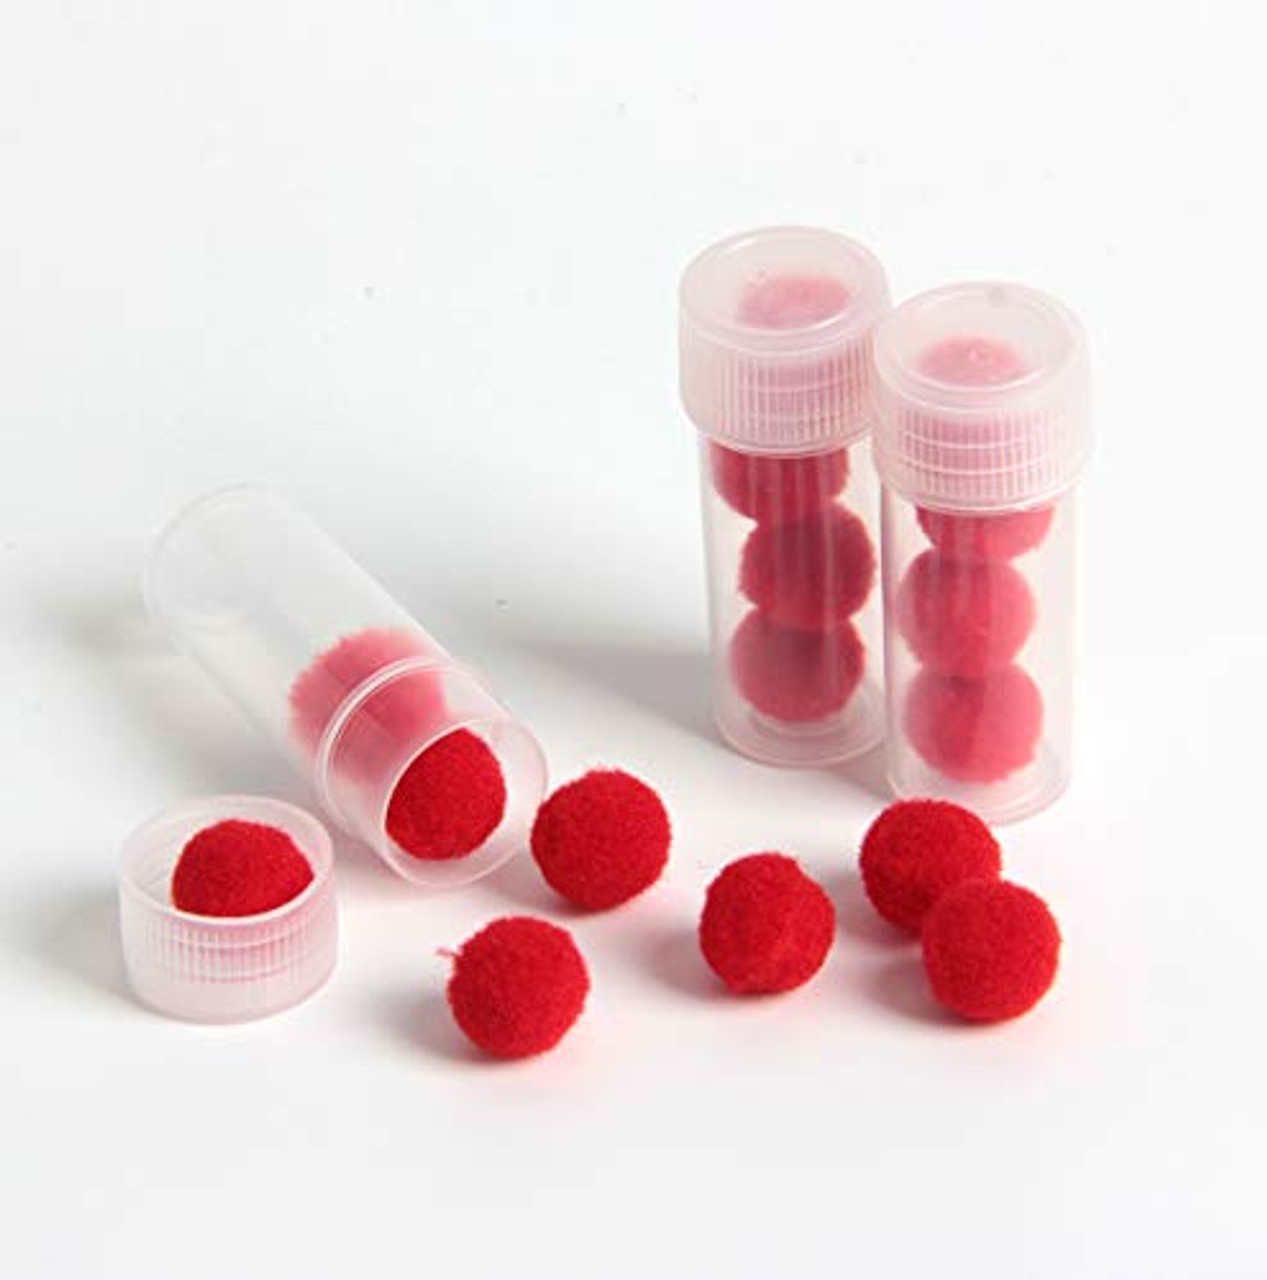 20Pcs 5ml Plastic Test Tubes Vials Sample Container with Cap for Chemist;;^